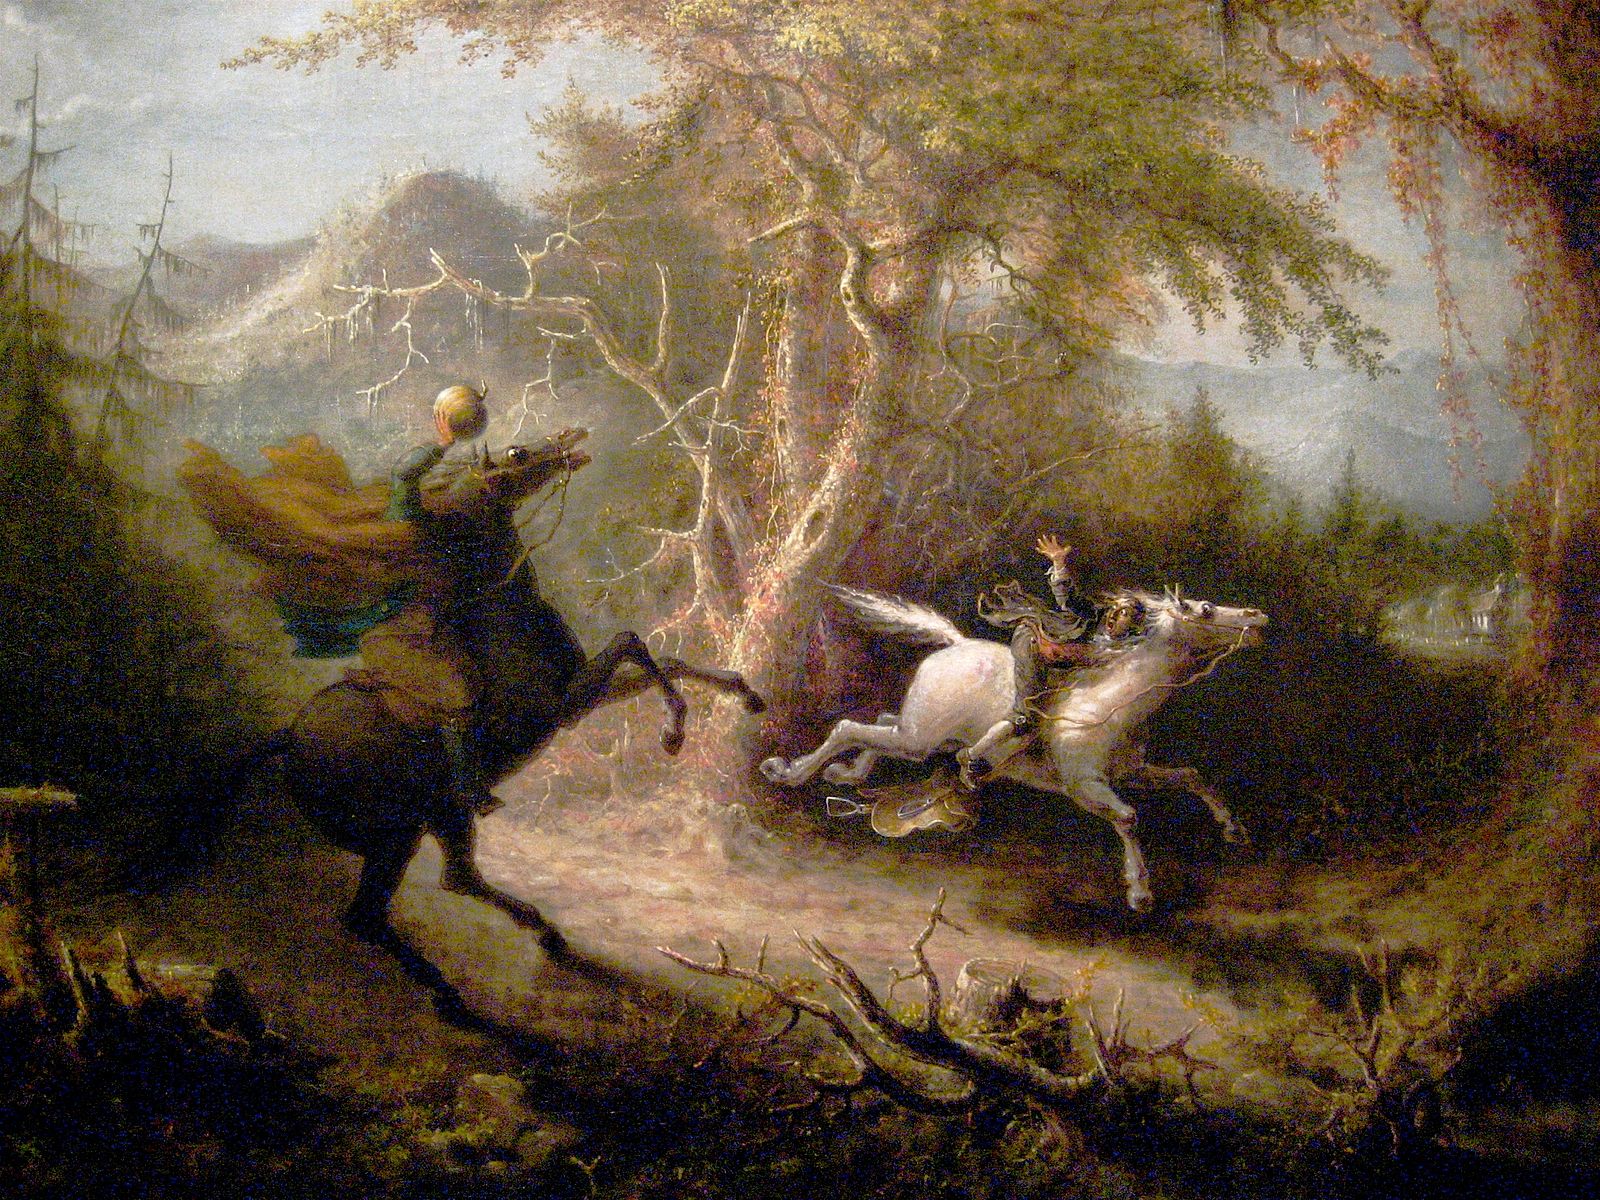 A painting of The Headless Horseman chasing Ichabod Crane